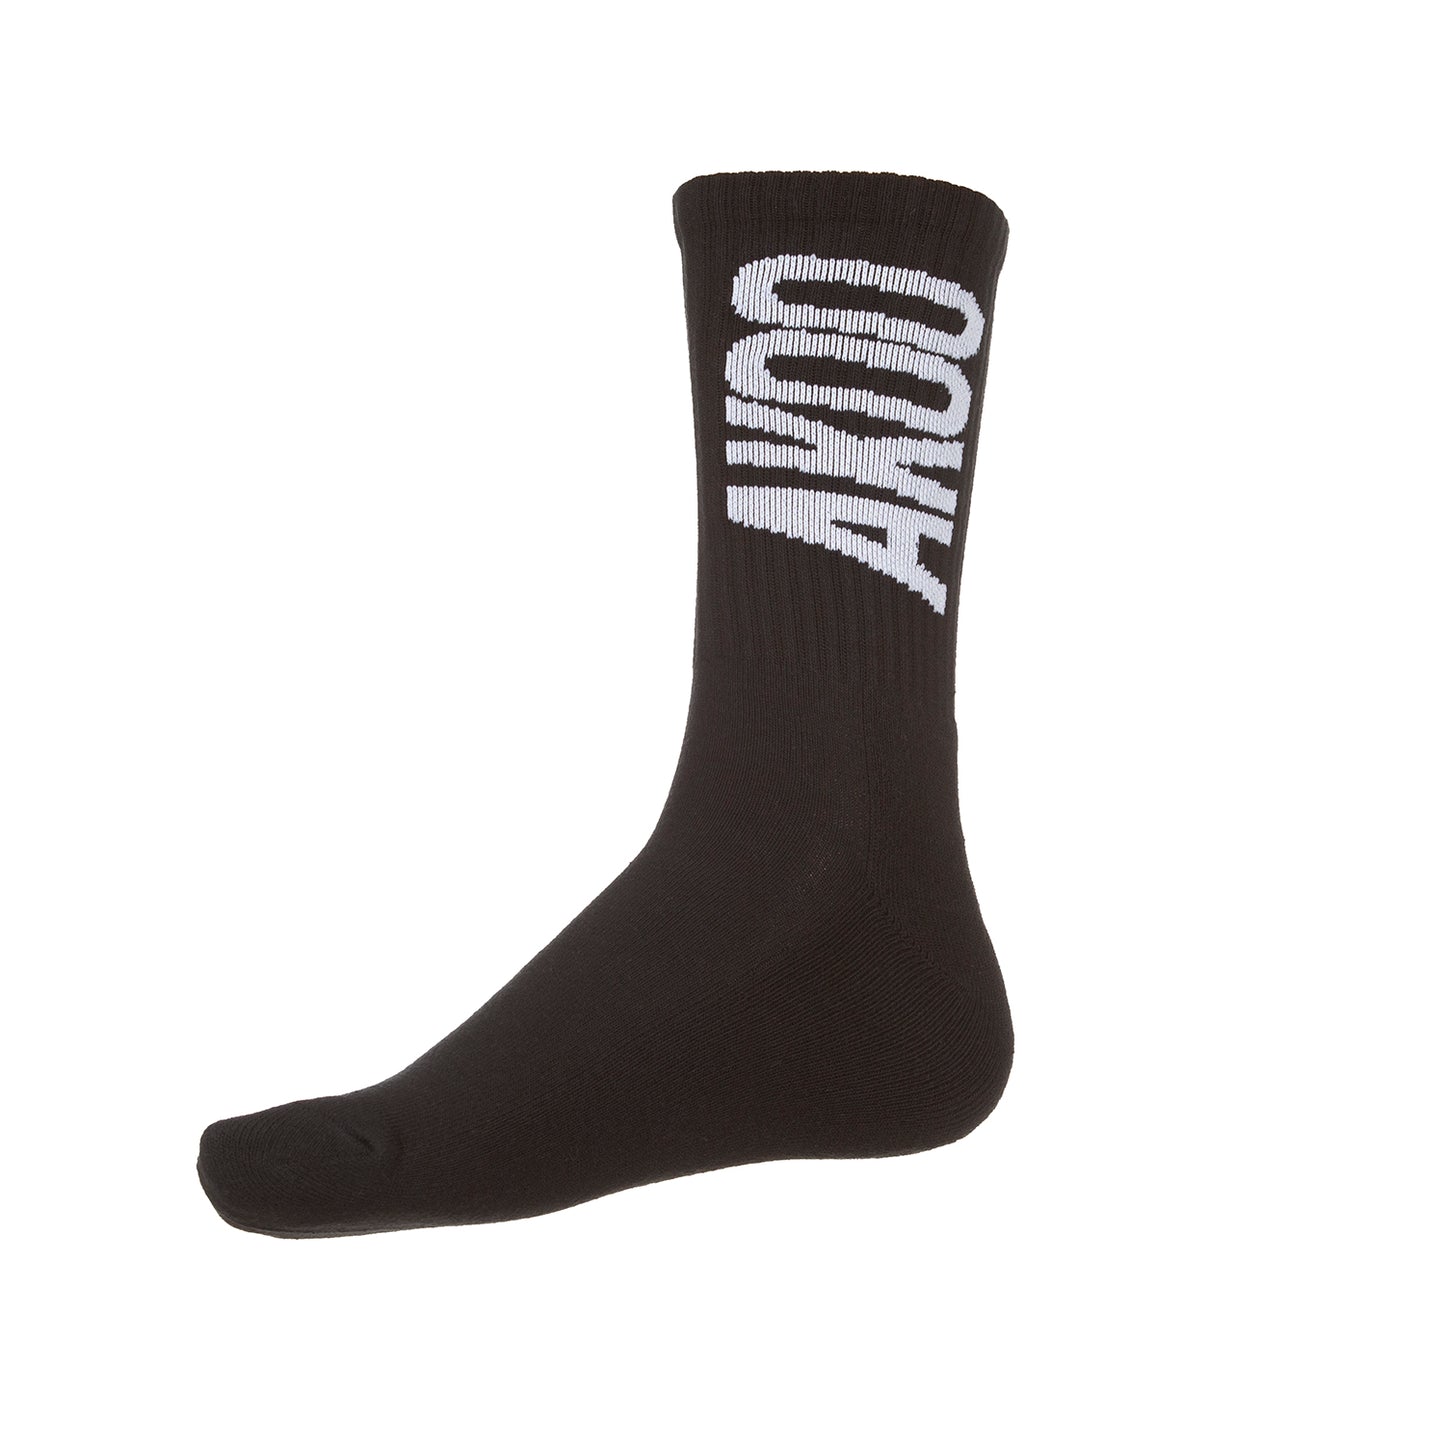 Comfy Socks (Black)